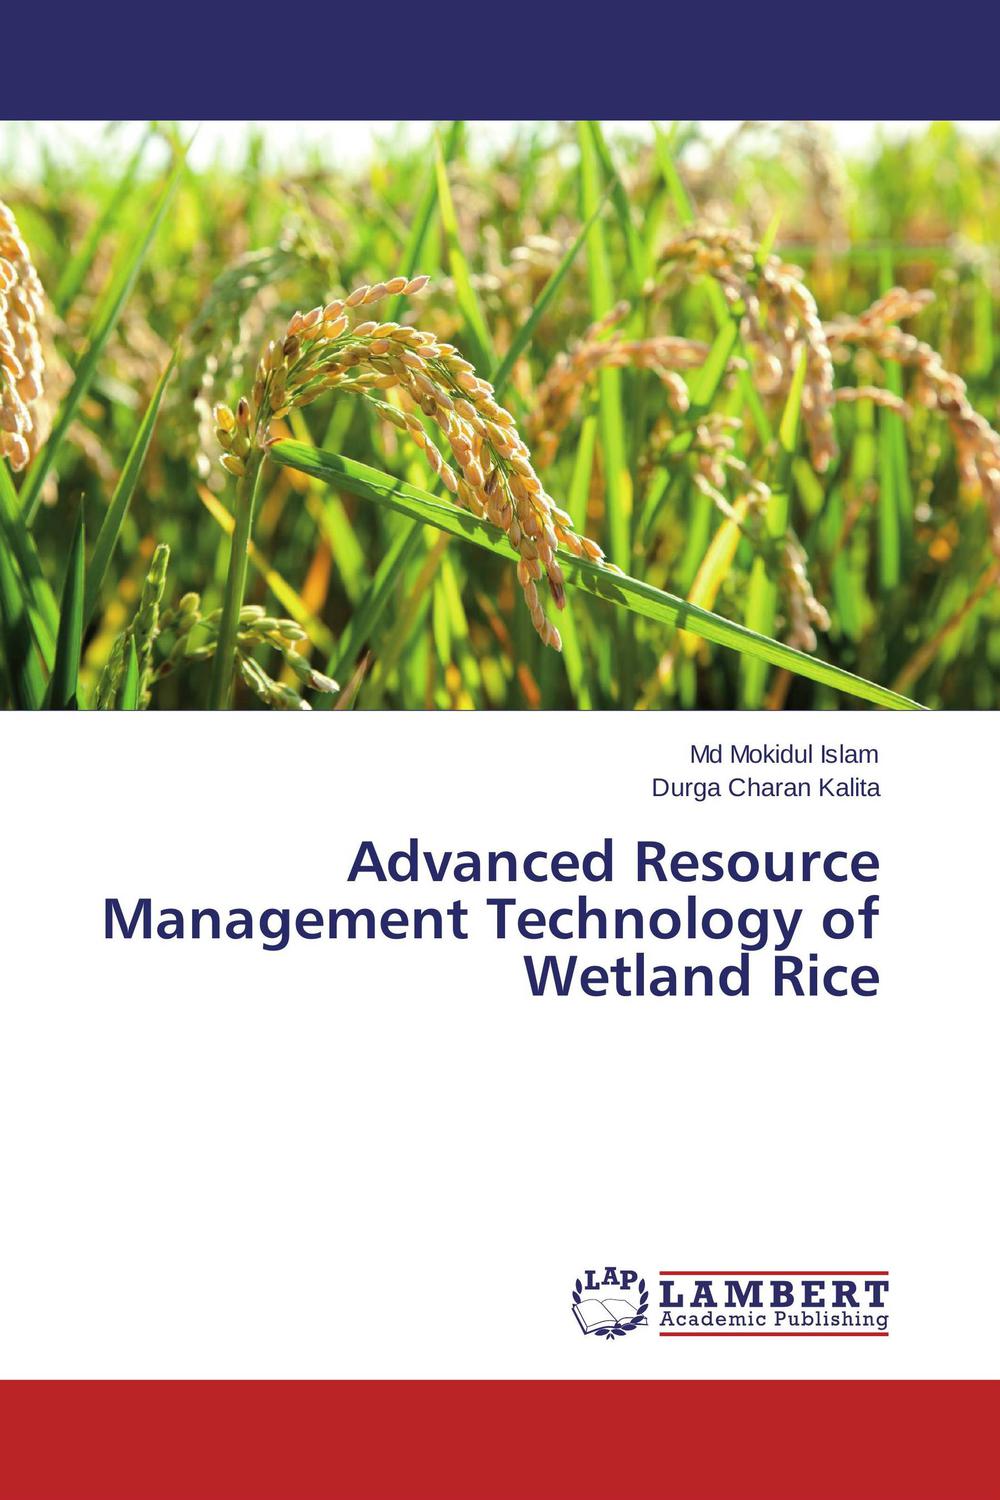 advanced resource management technology of wetland rice 1st edition islam, md mokidul, kalita, durga charan